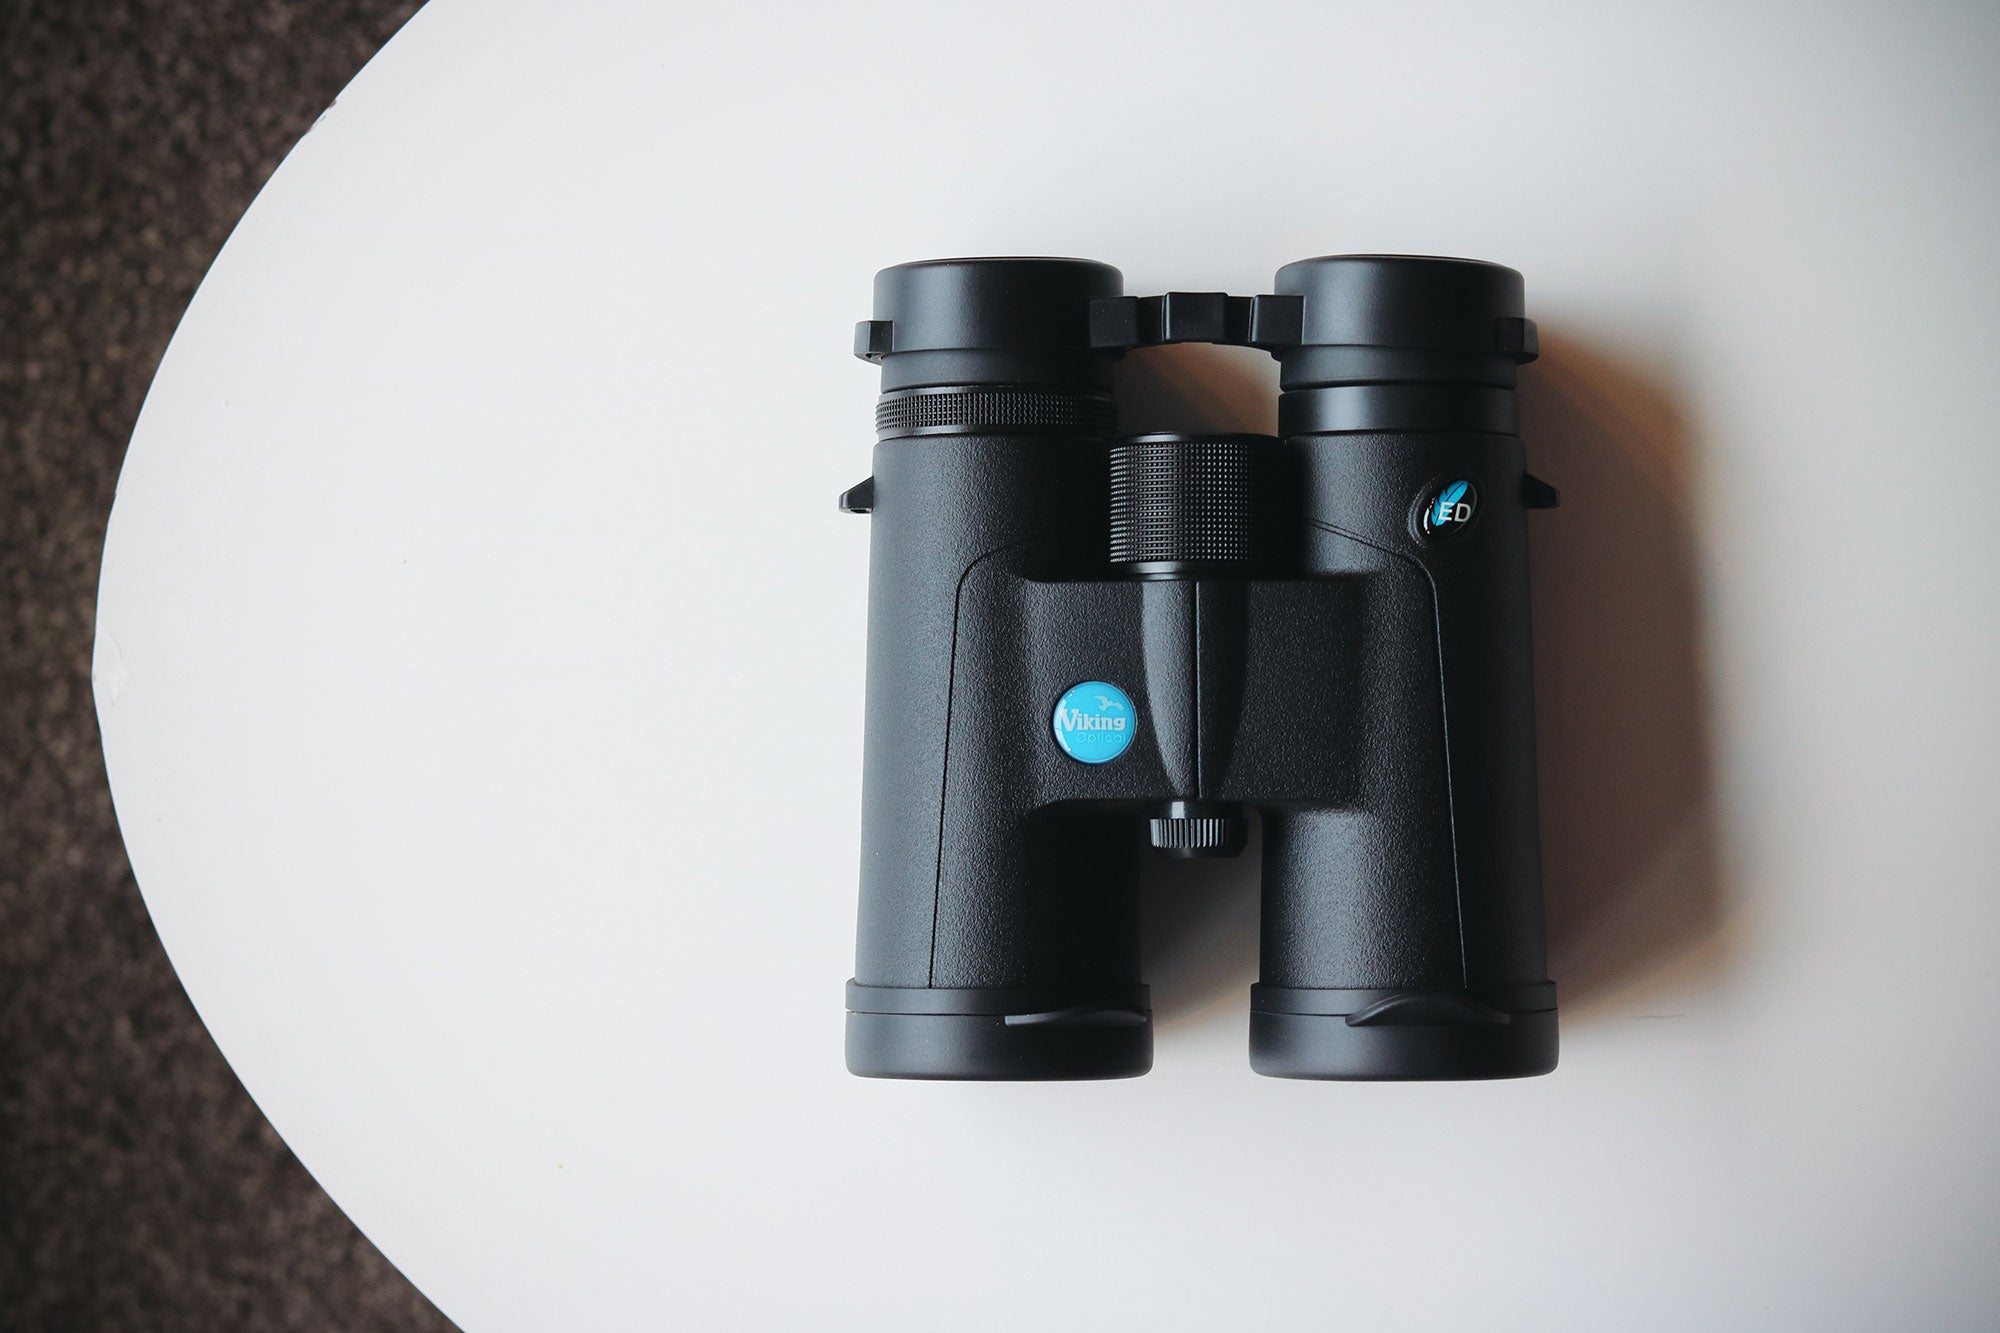 Viking Optical Binocular - Kestrel 8 x 42